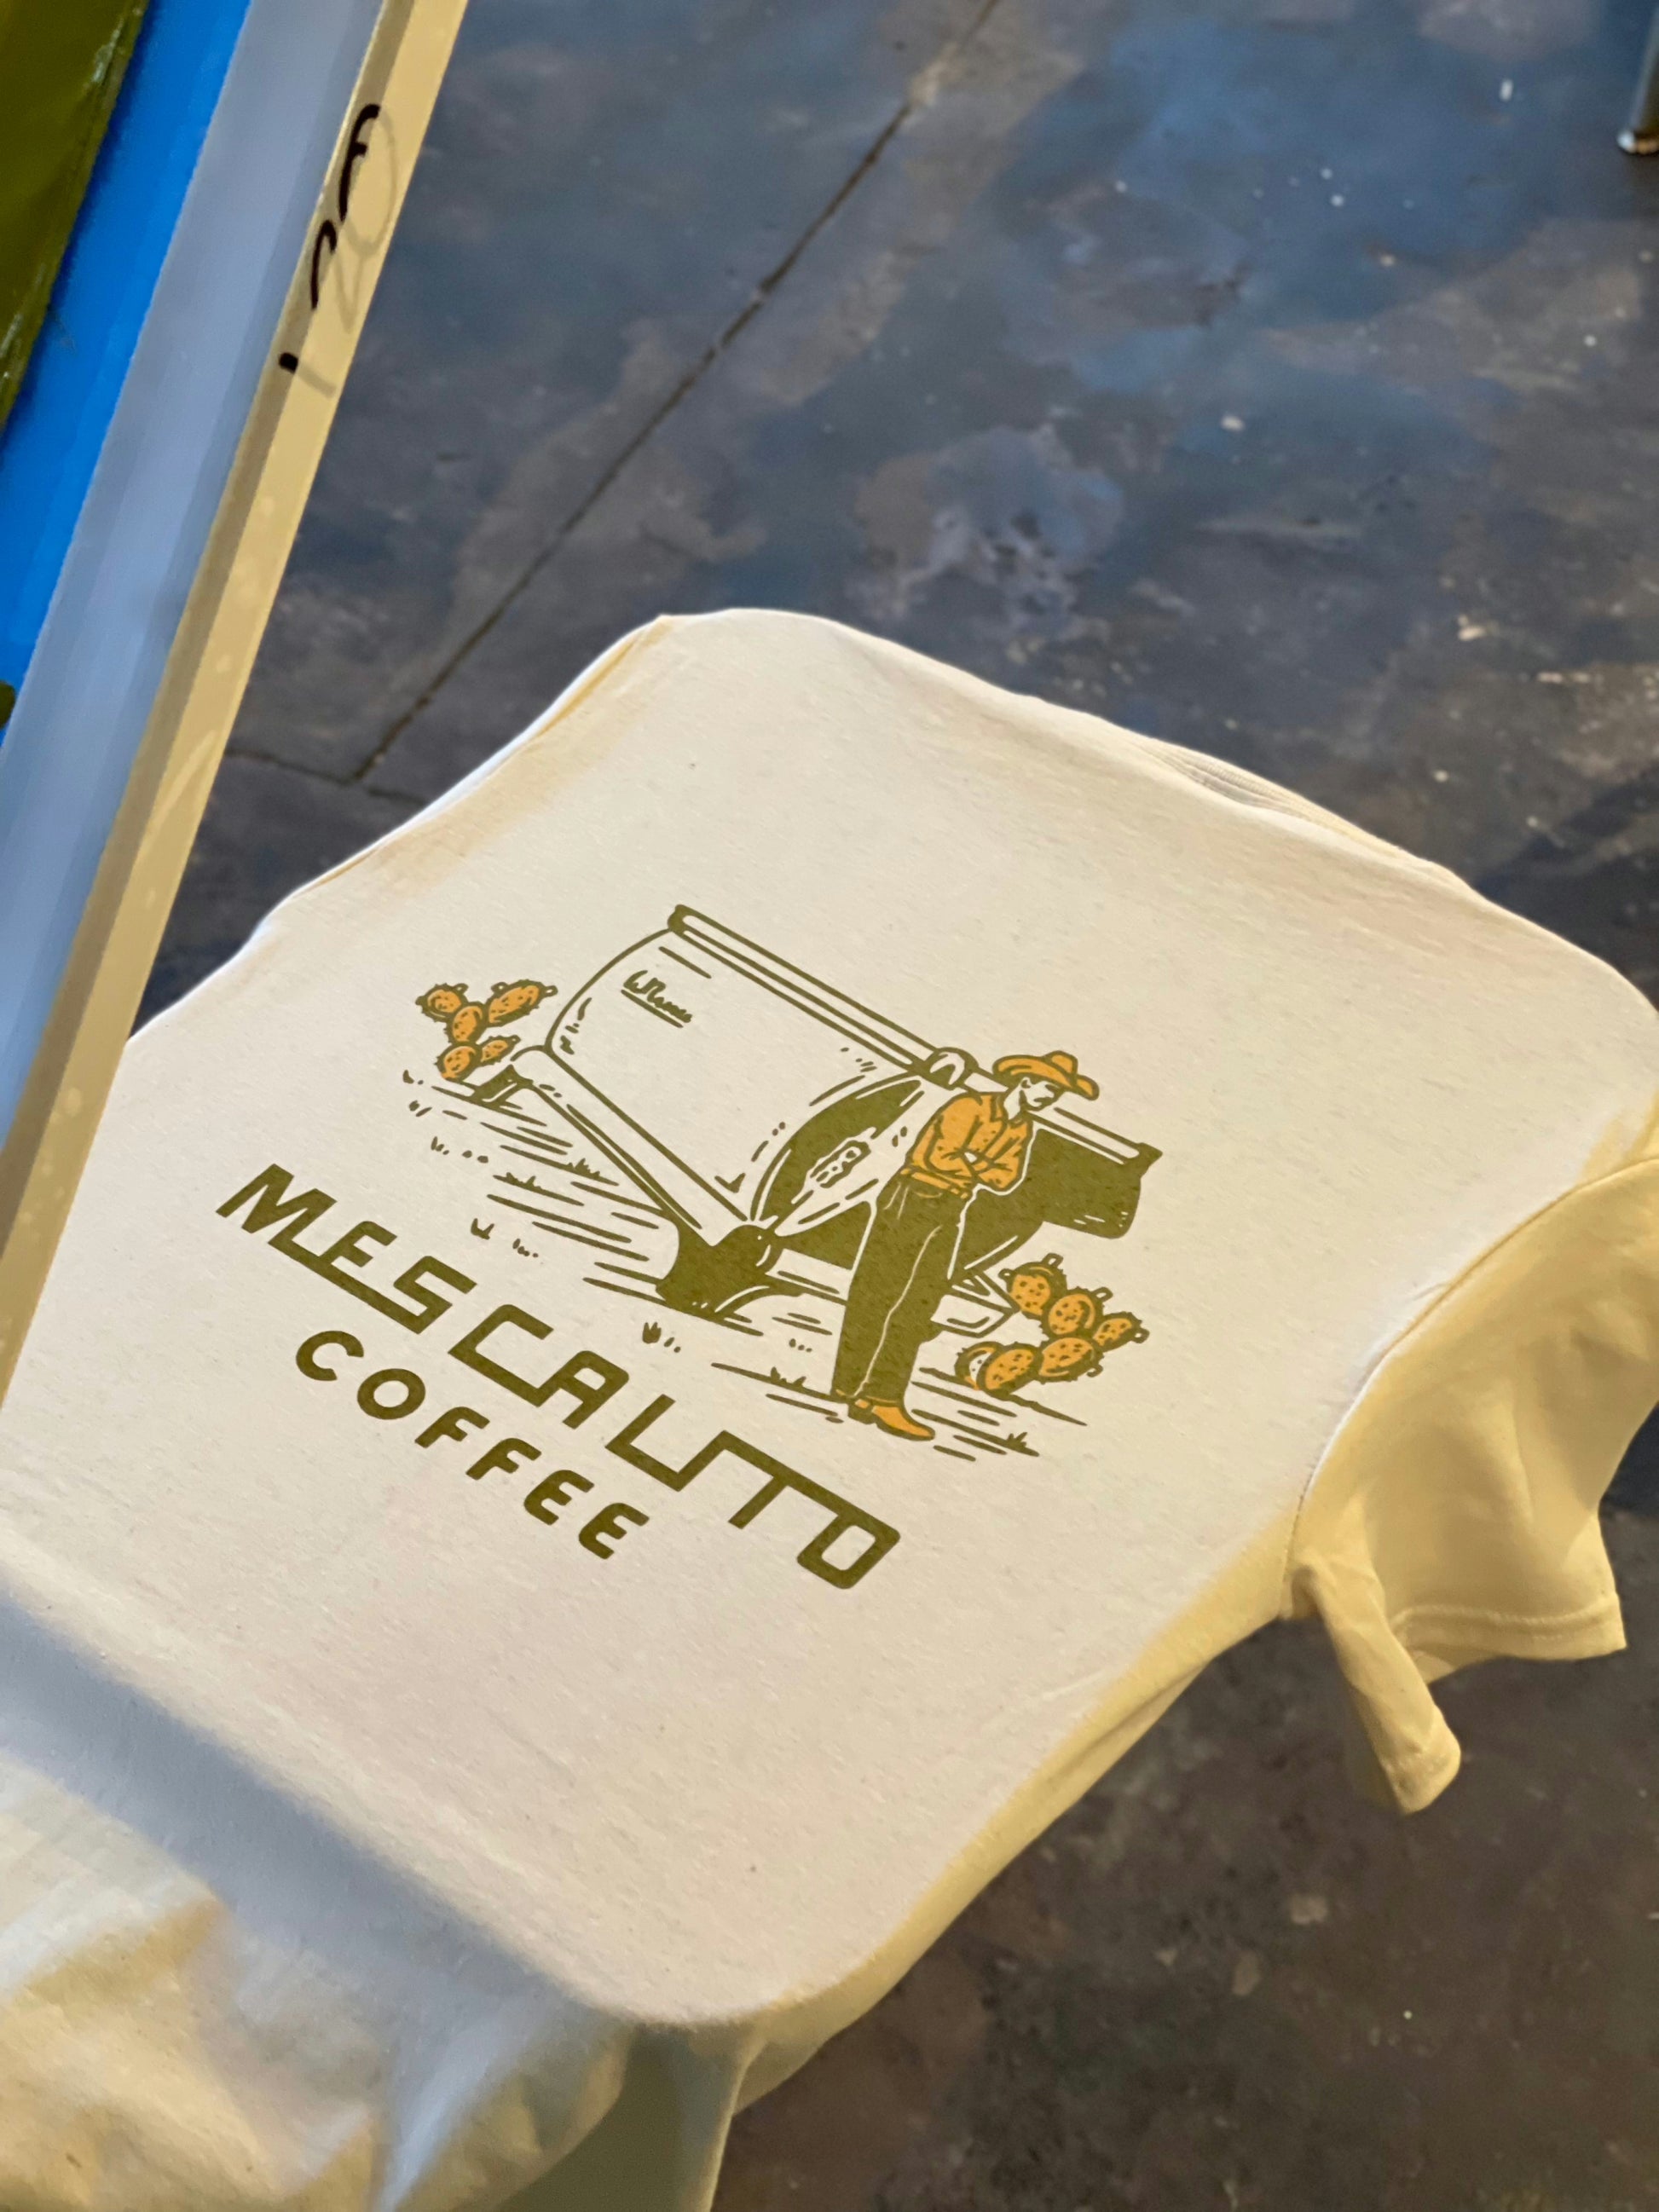 Coffee Cowboy | Mescalito - Coffee - Shirt - Cowboy